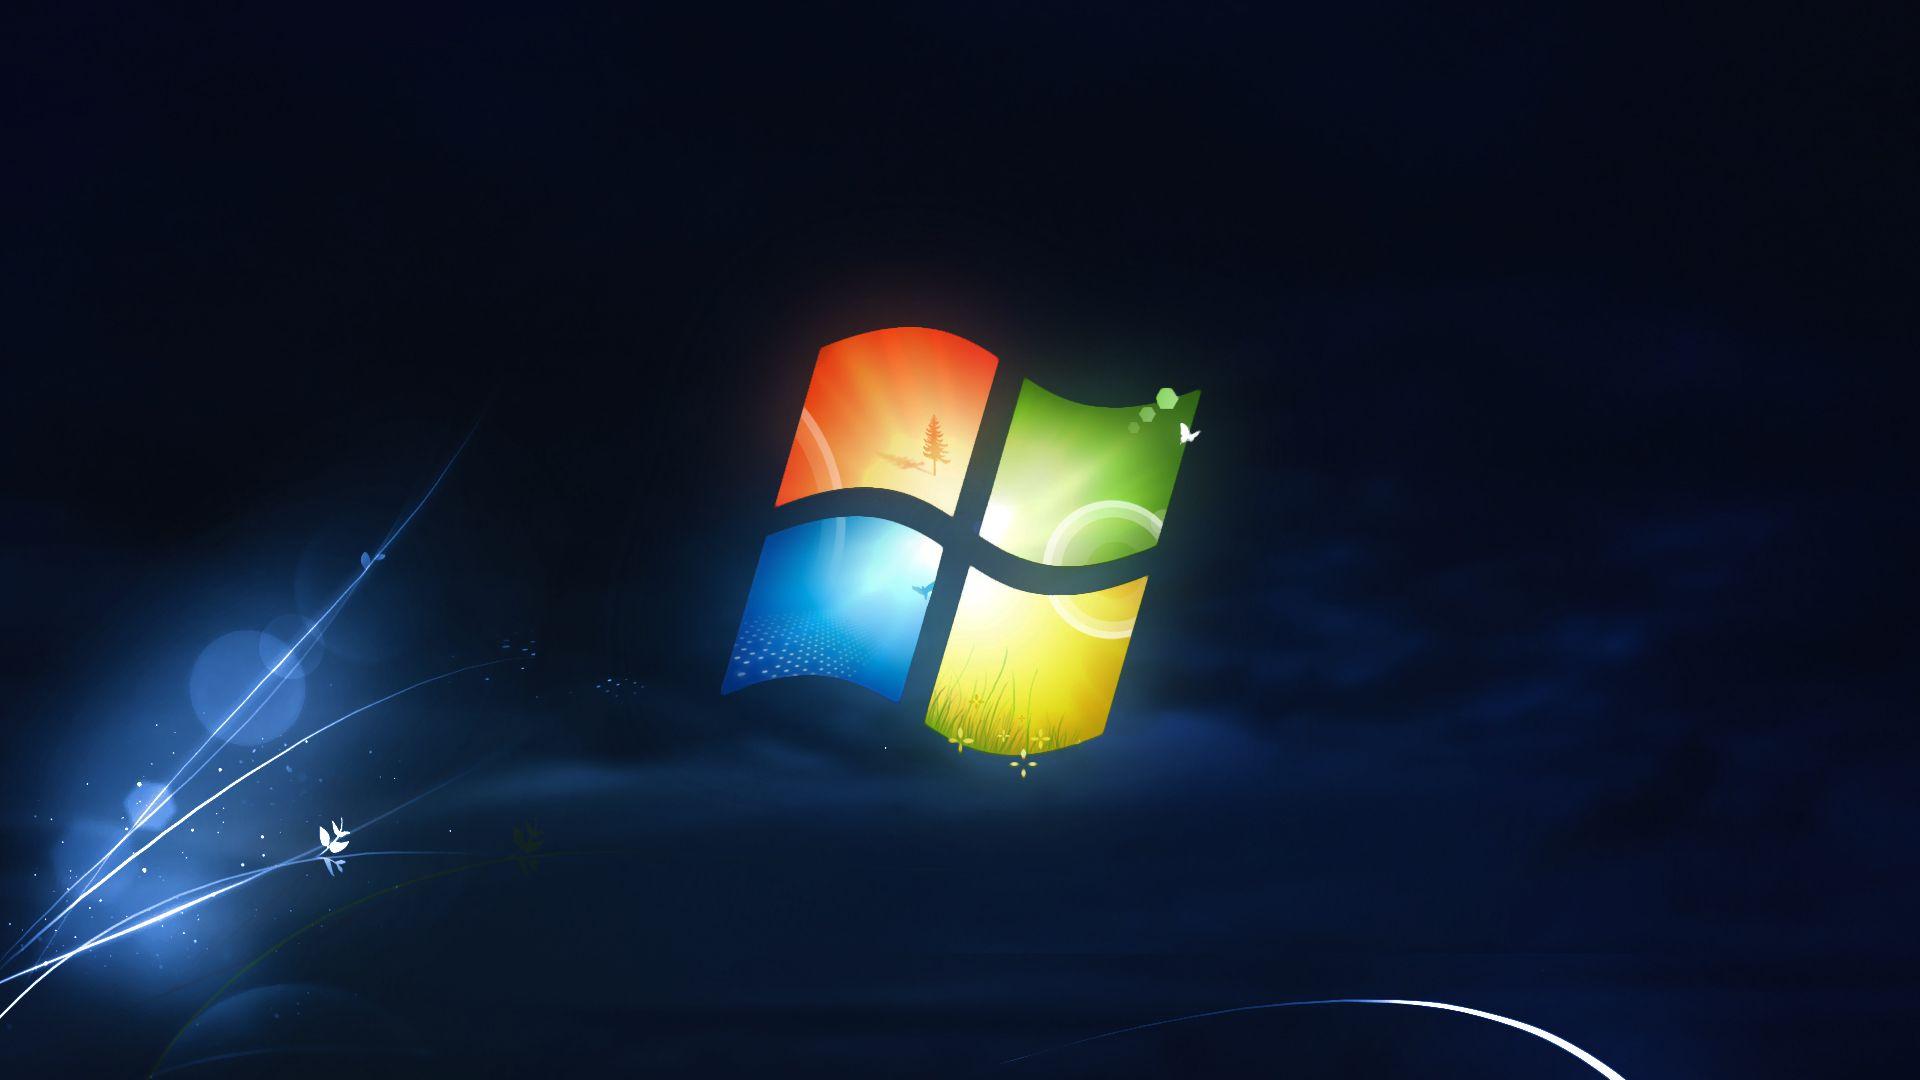 Microsoft Desktop Background